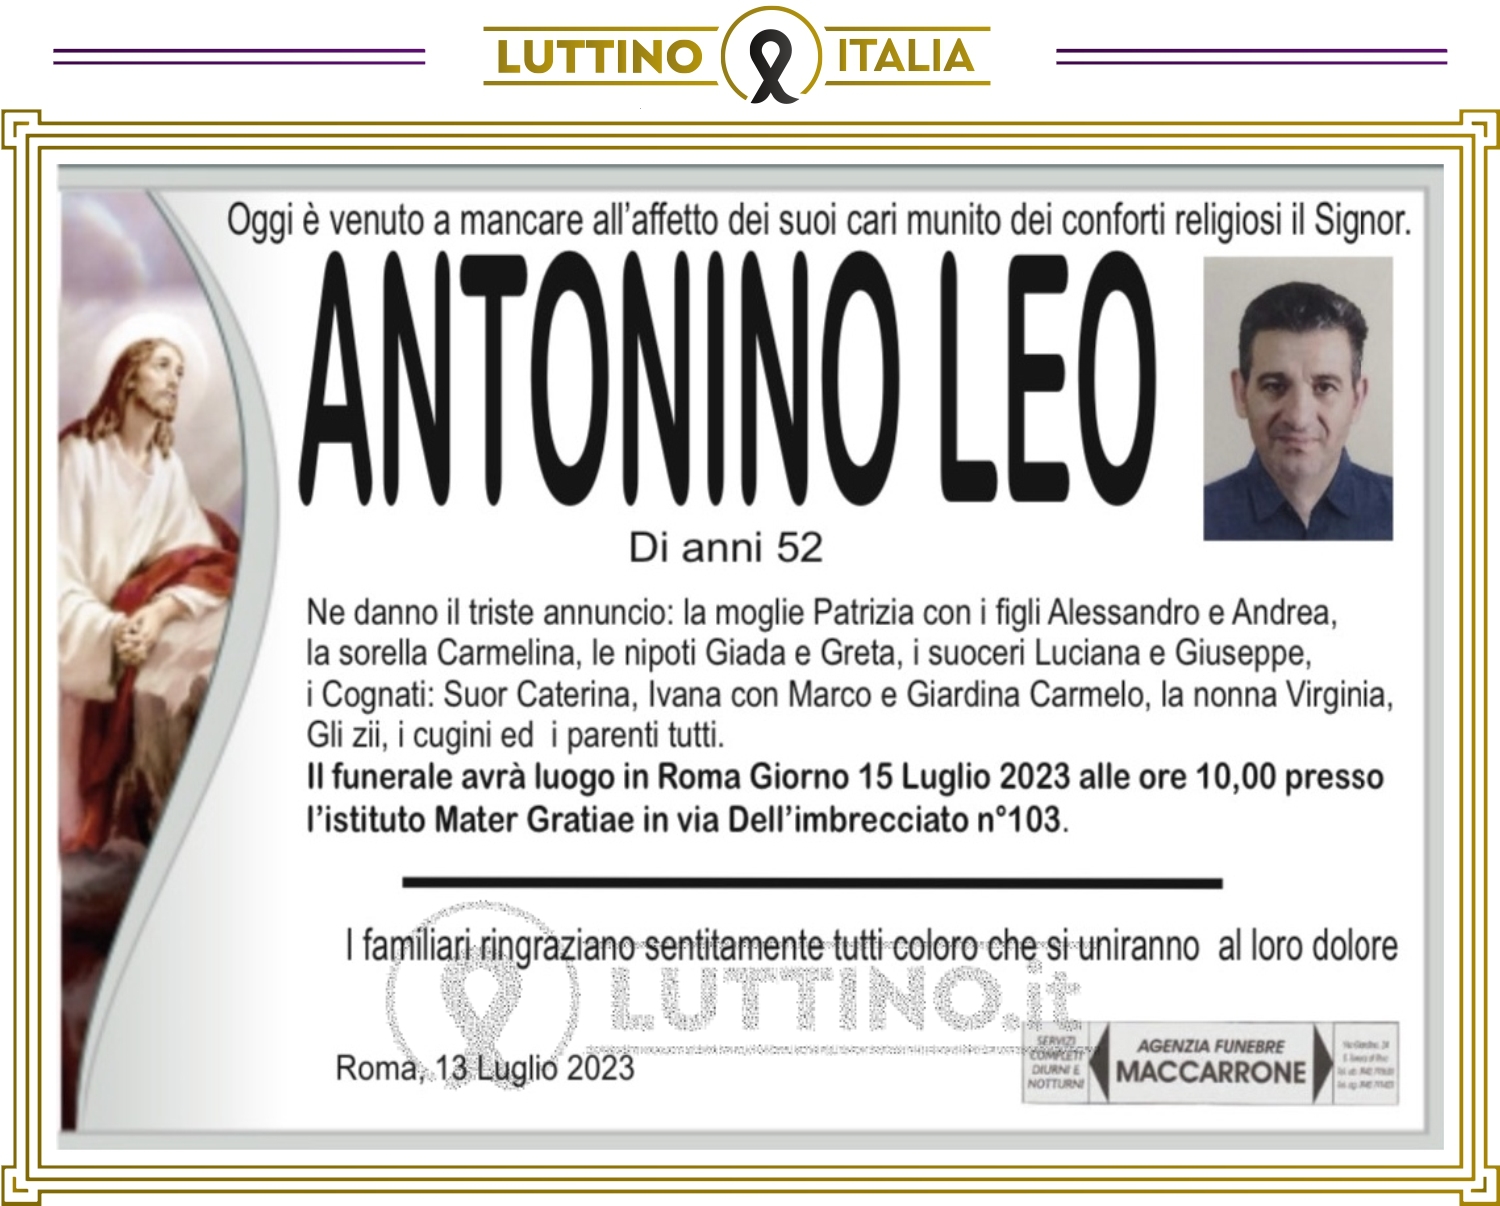 Antonino Leo